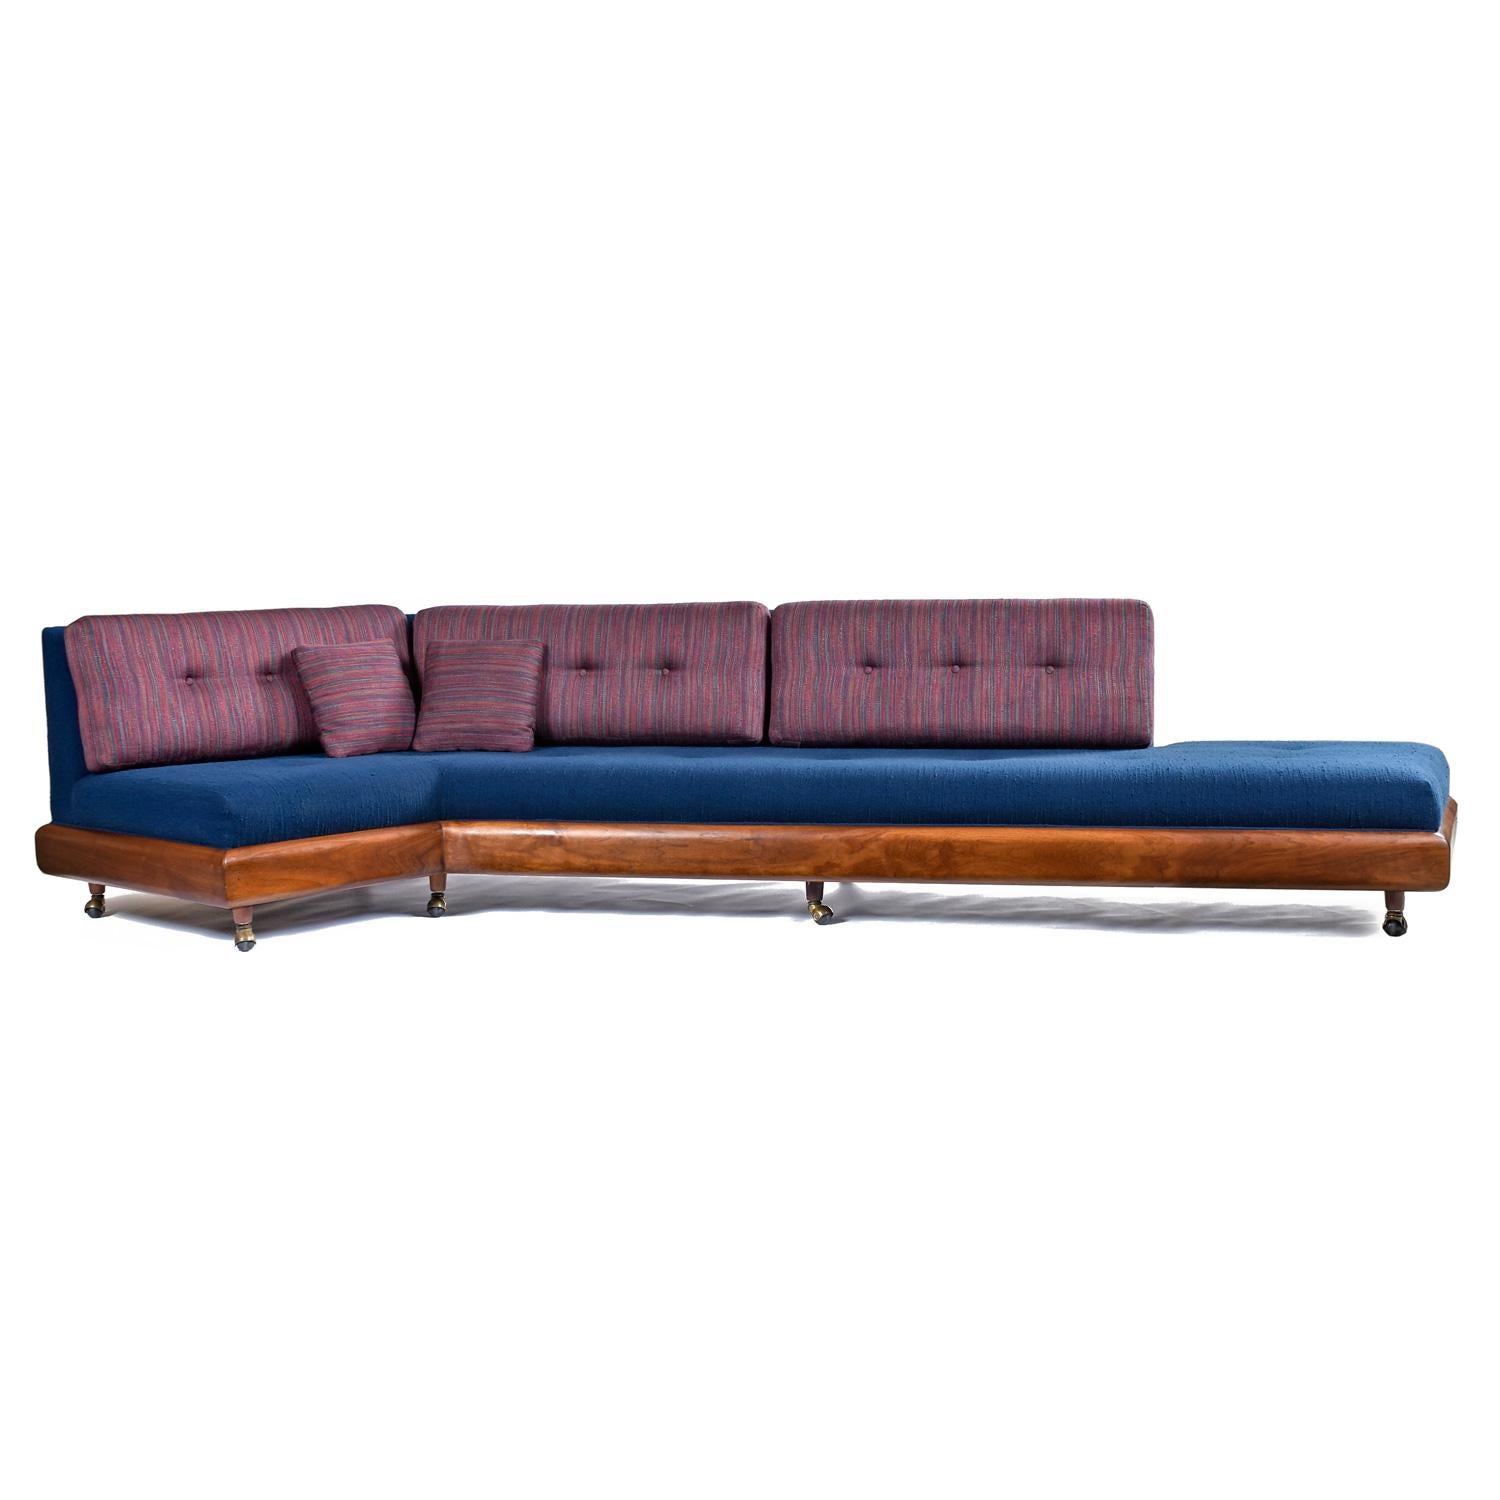 Mid-Century Modern Original Adrian Pearsall Platform Boomerang Sofa 2300-S for Craft Associates